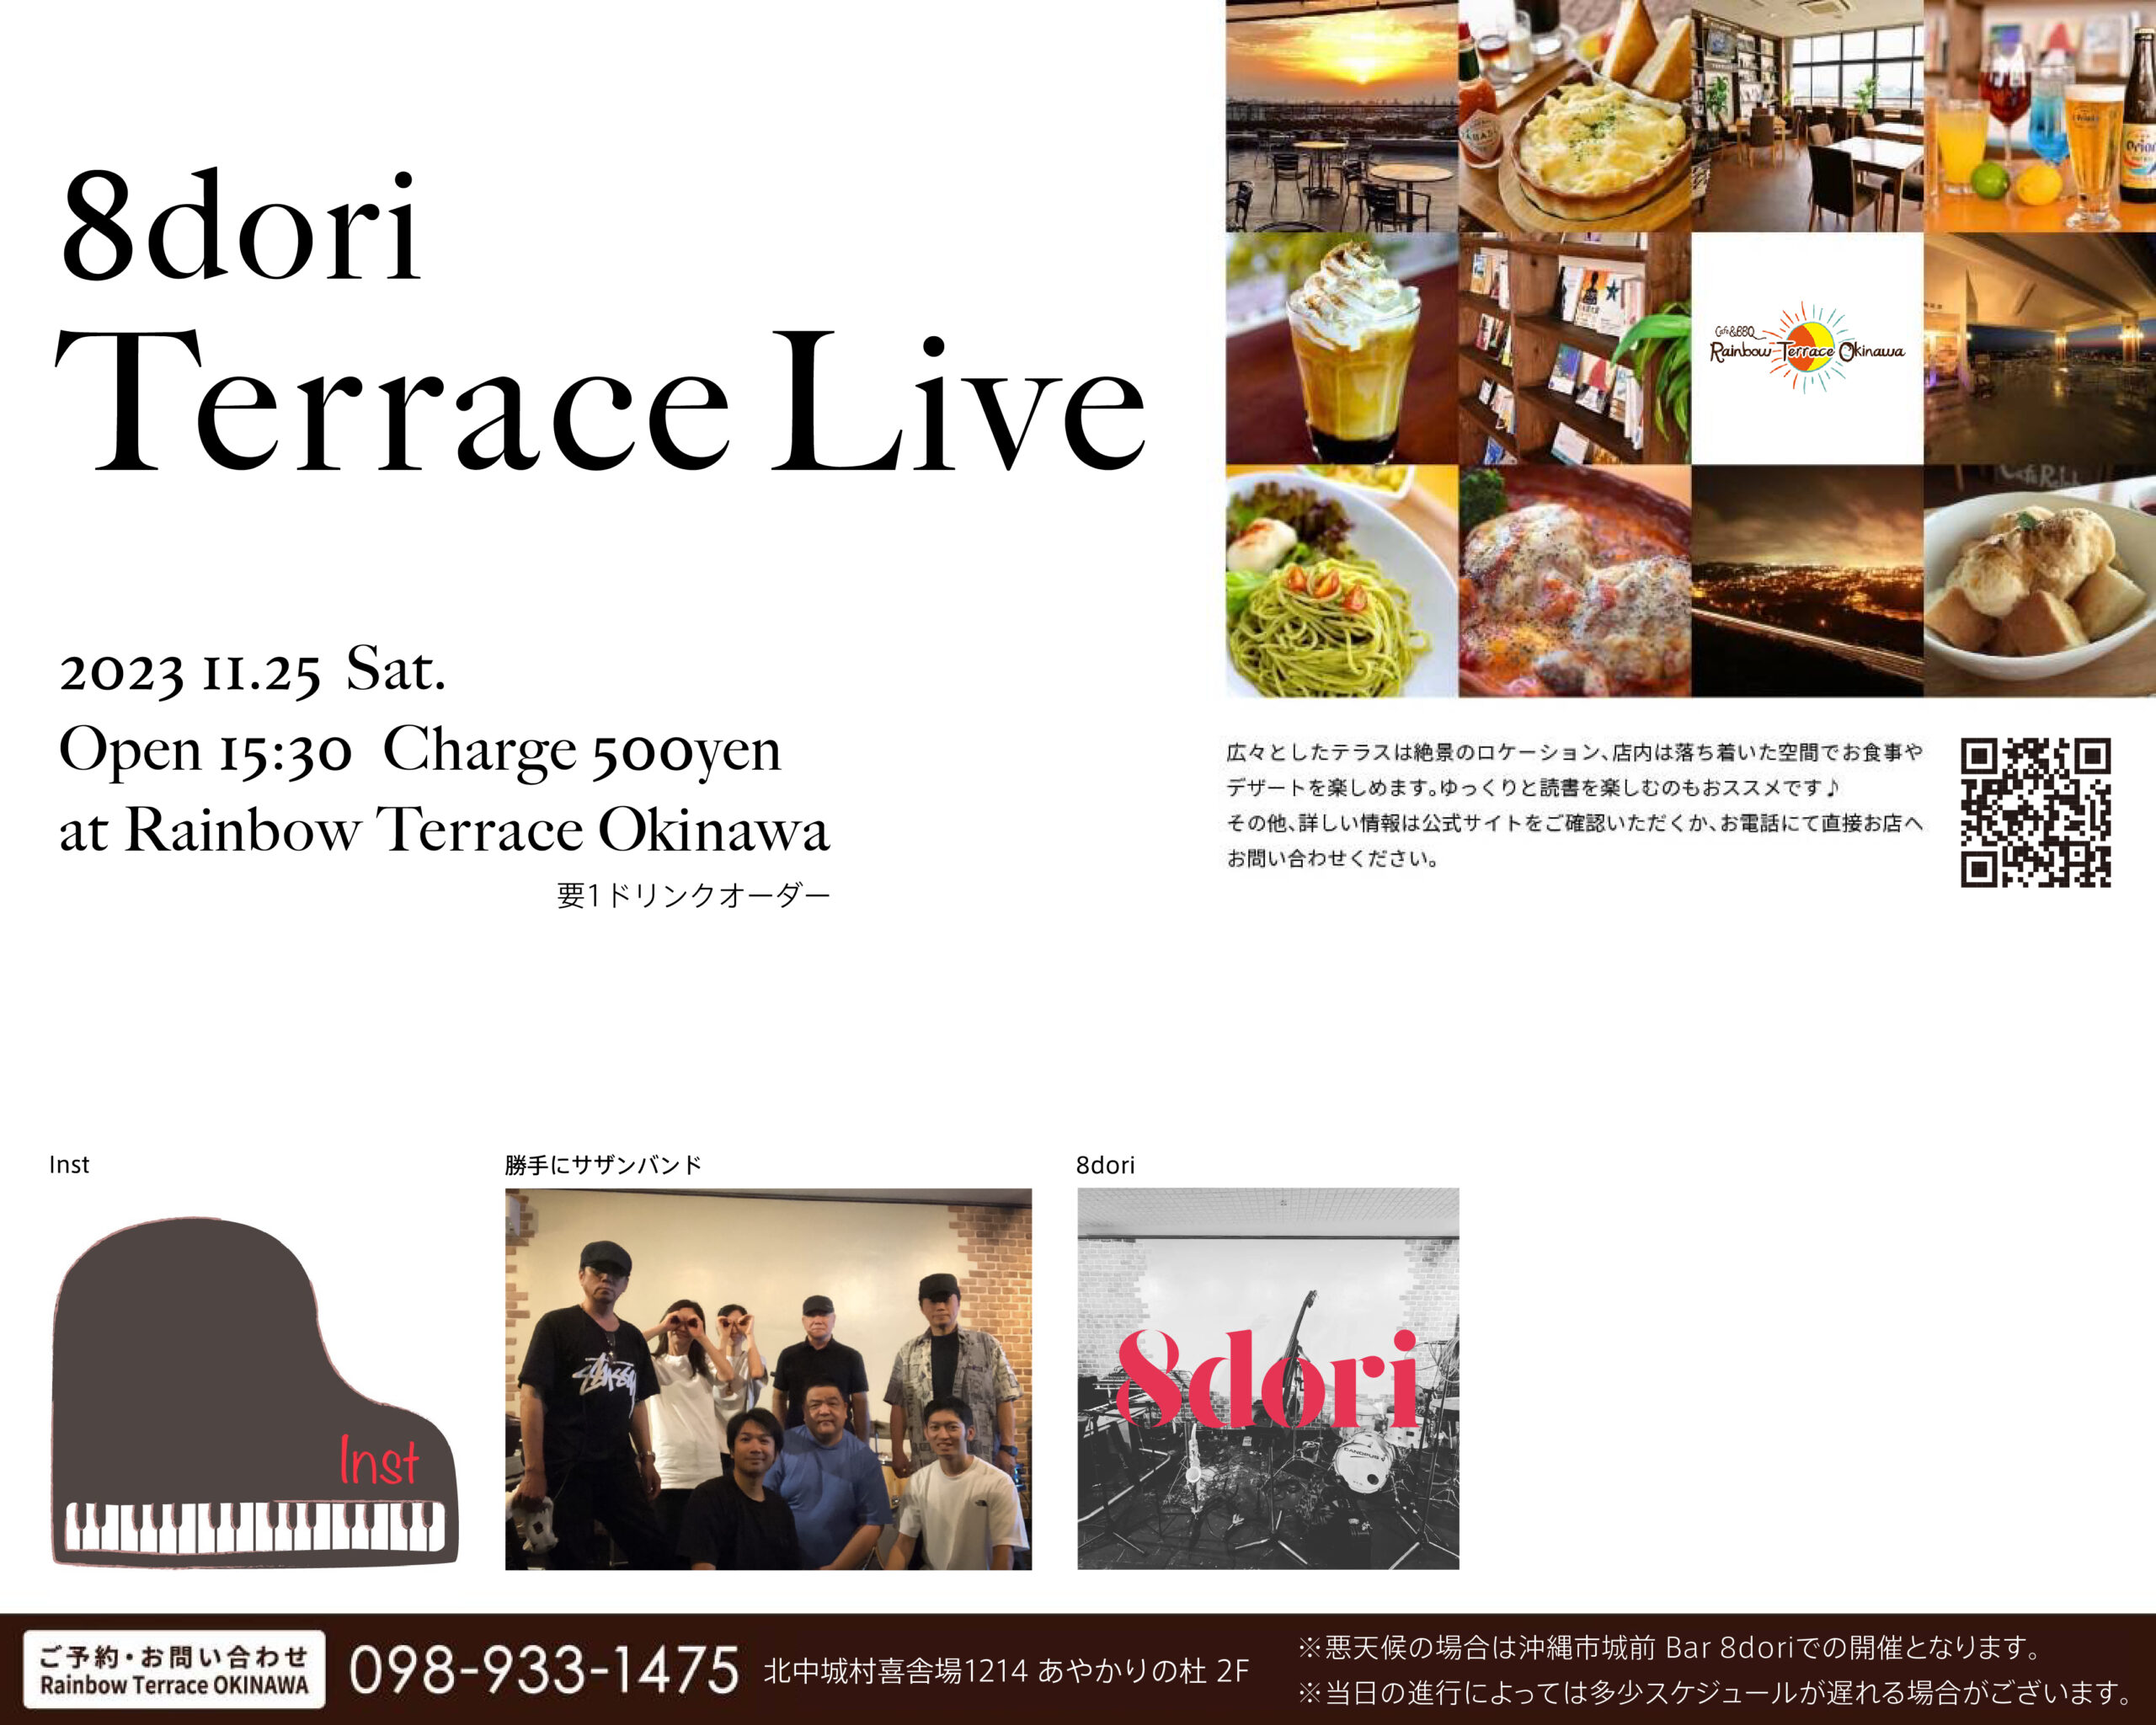 8dori Terrace Live